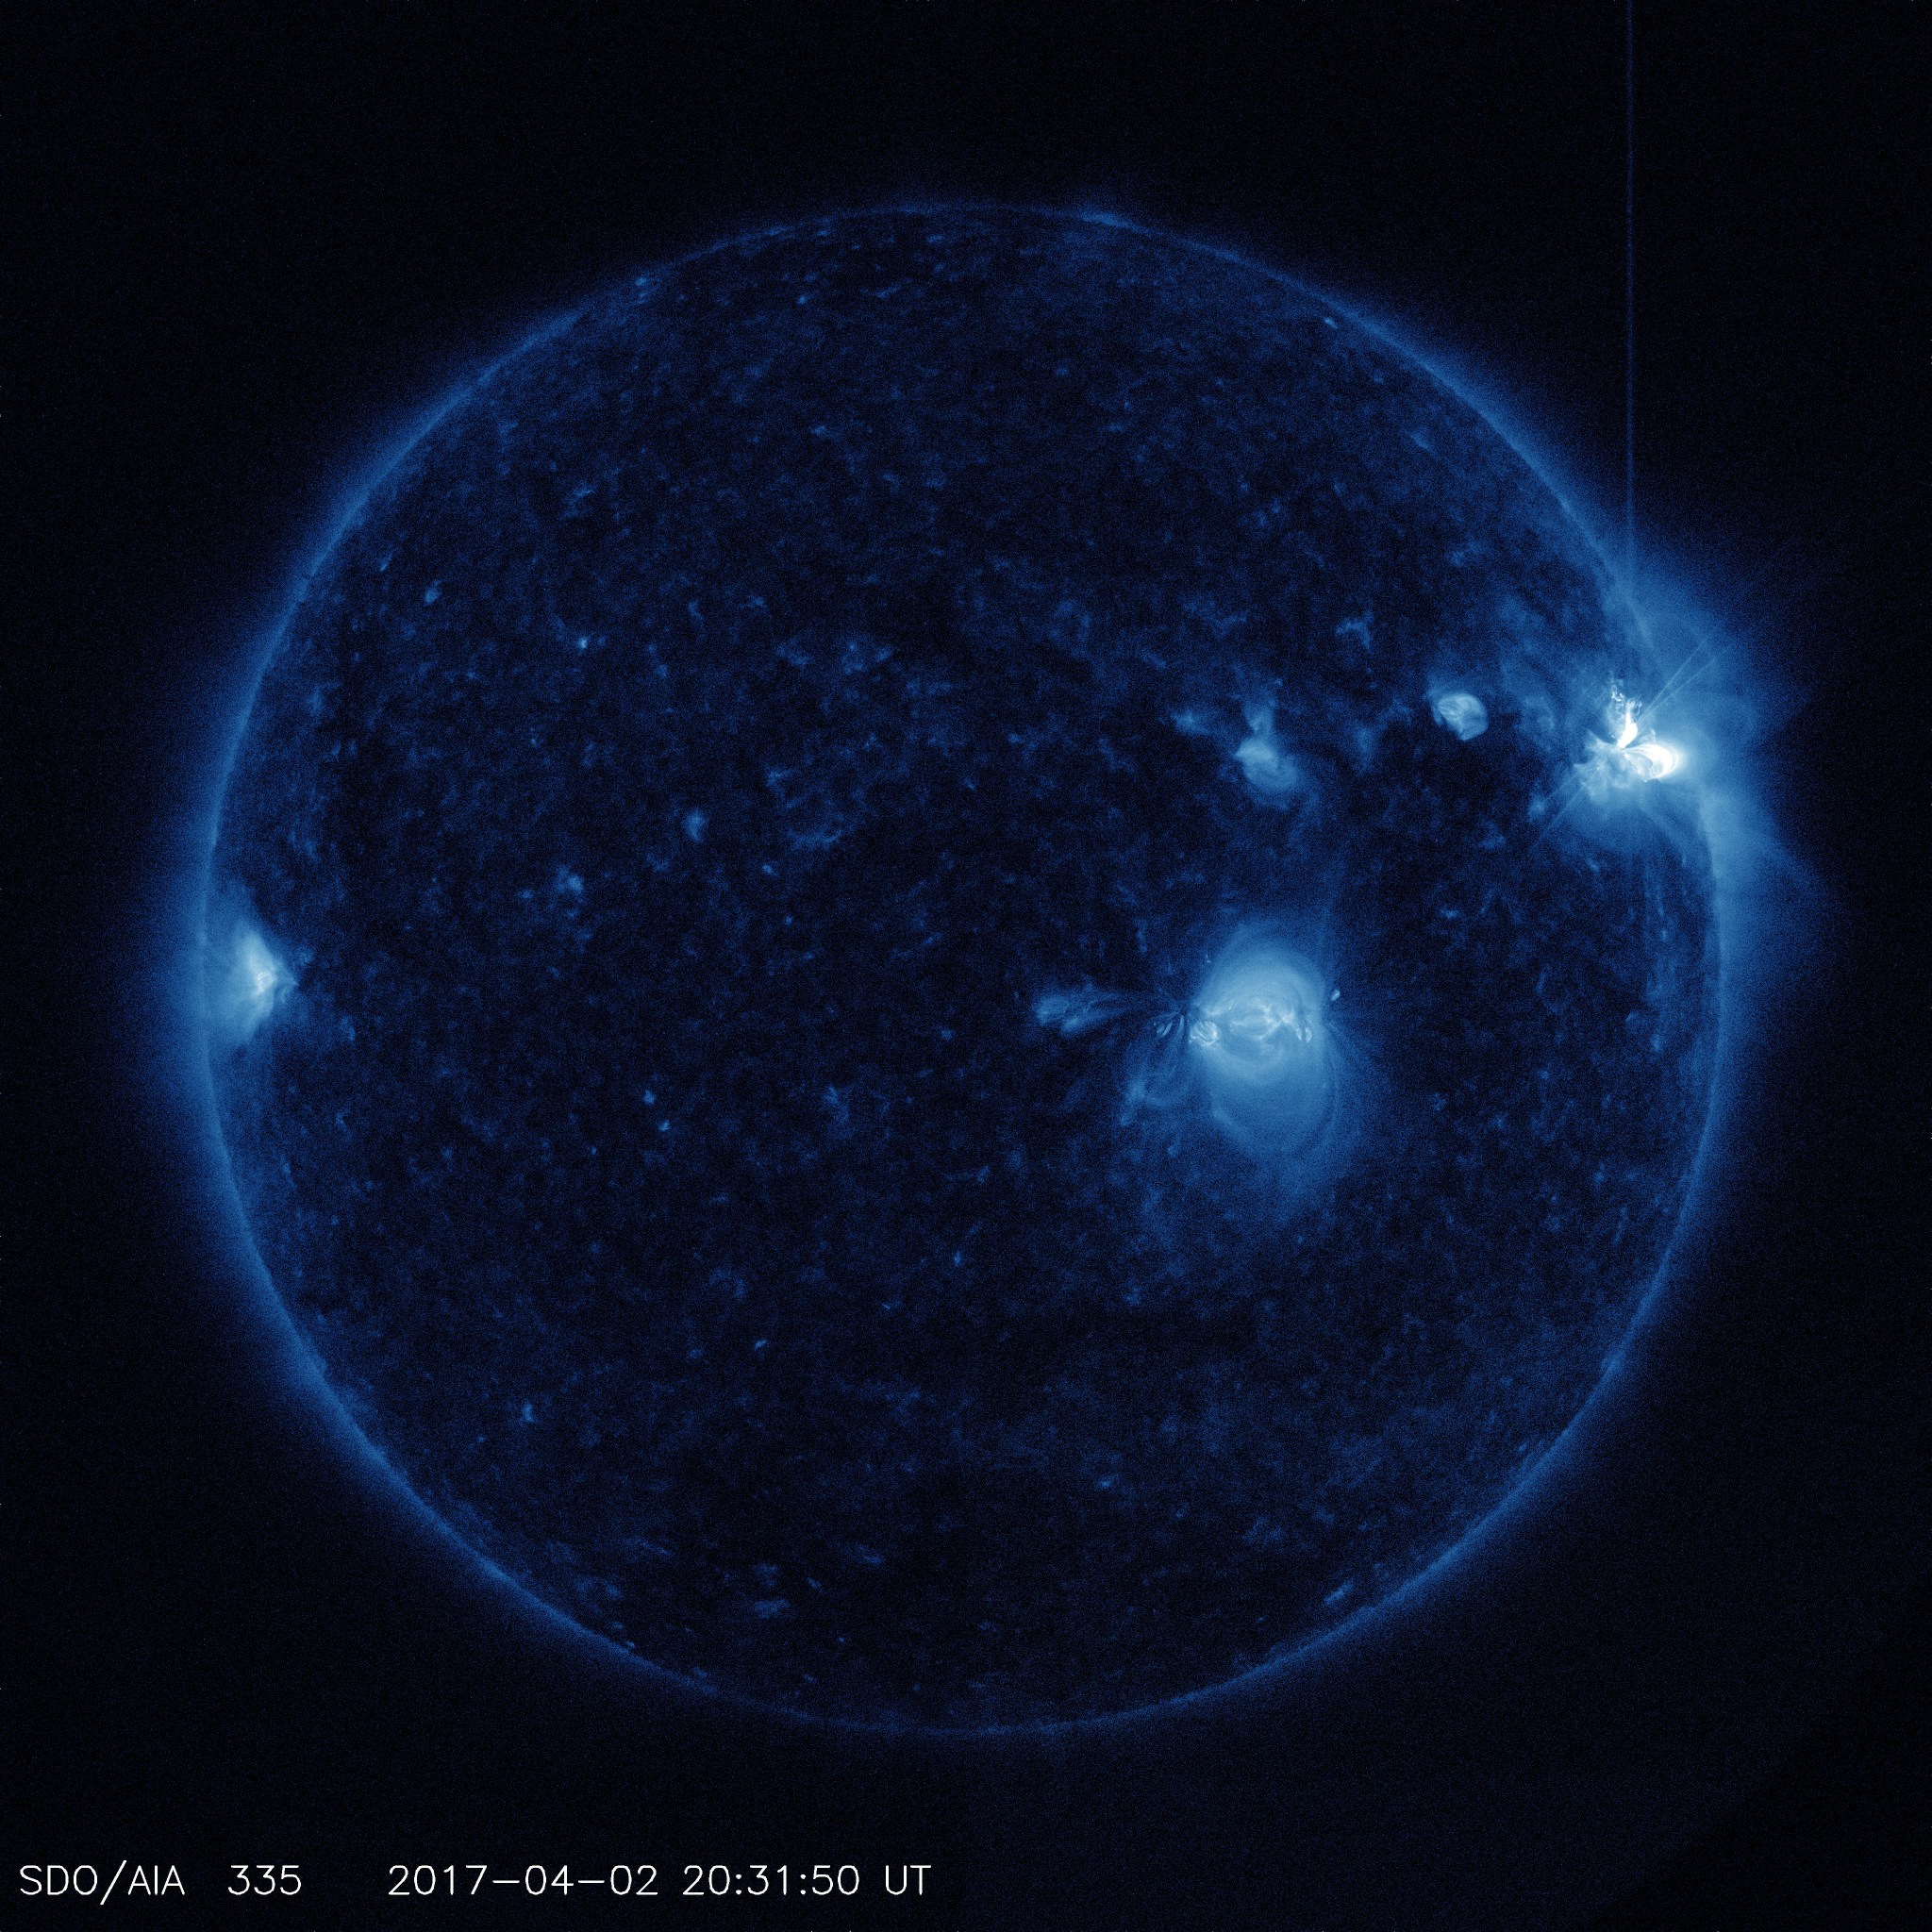 SDO solar flare image from April 2, 2017